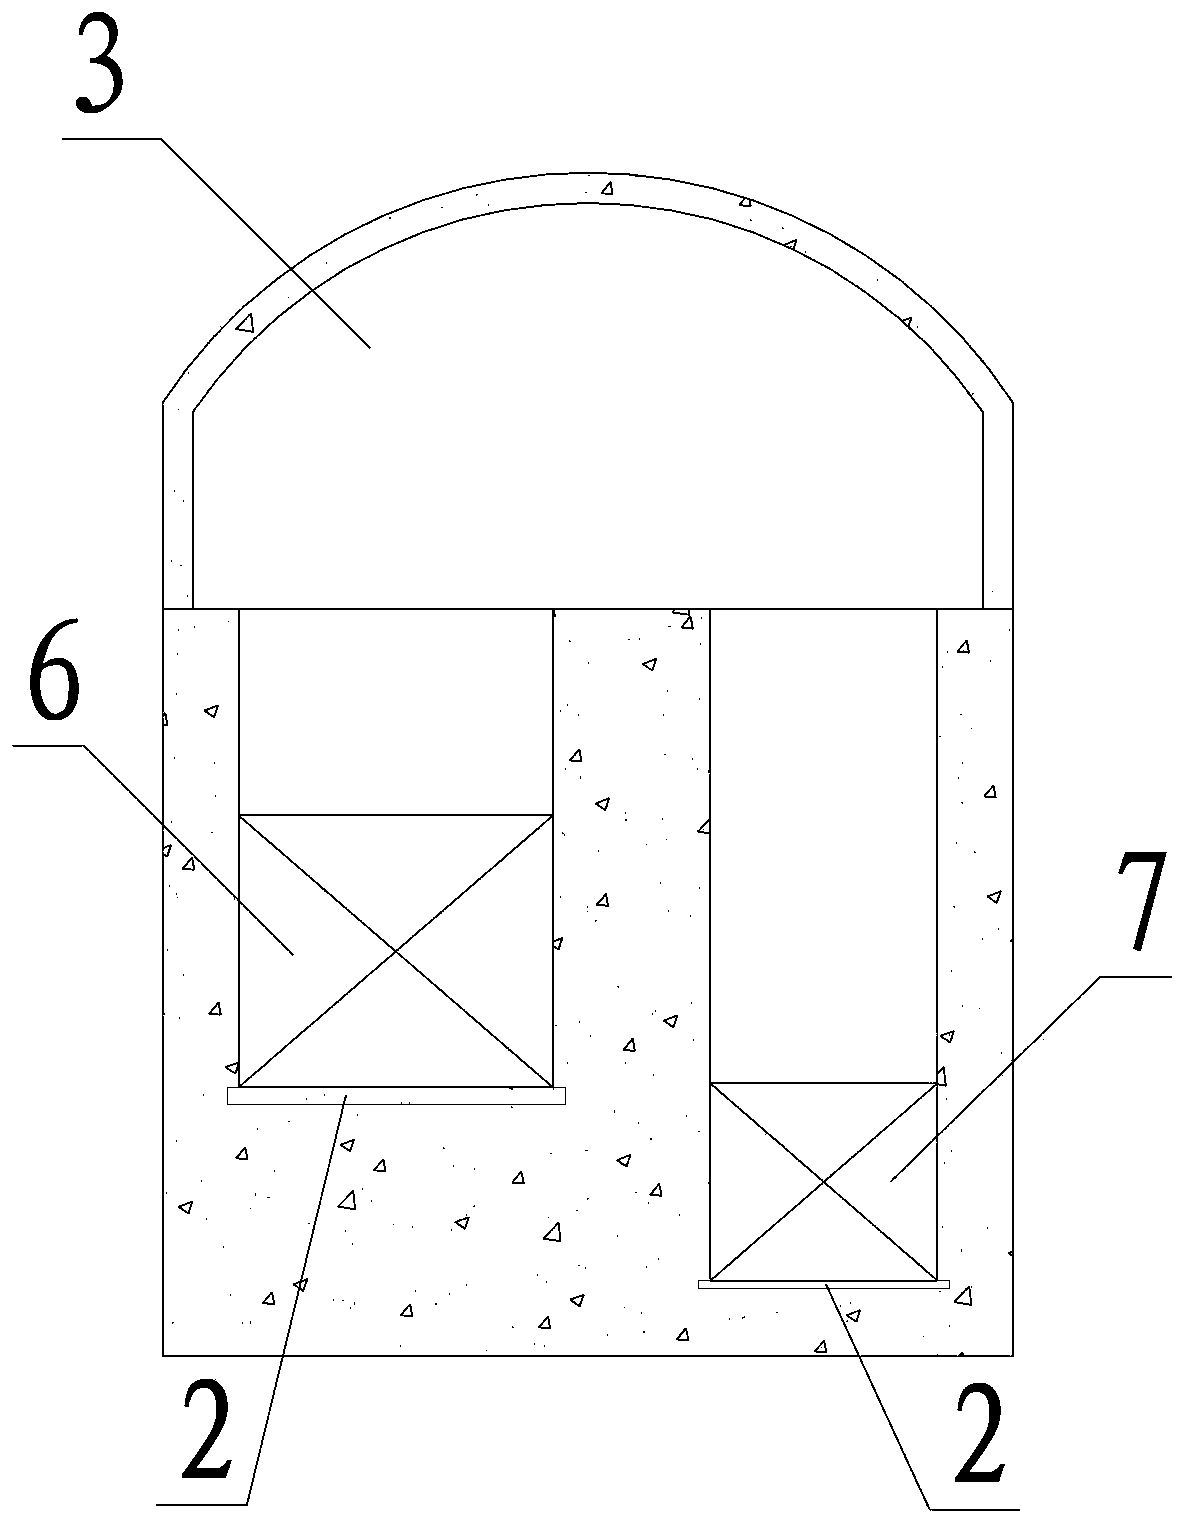 Multi-purpose tunnel arrangement structure